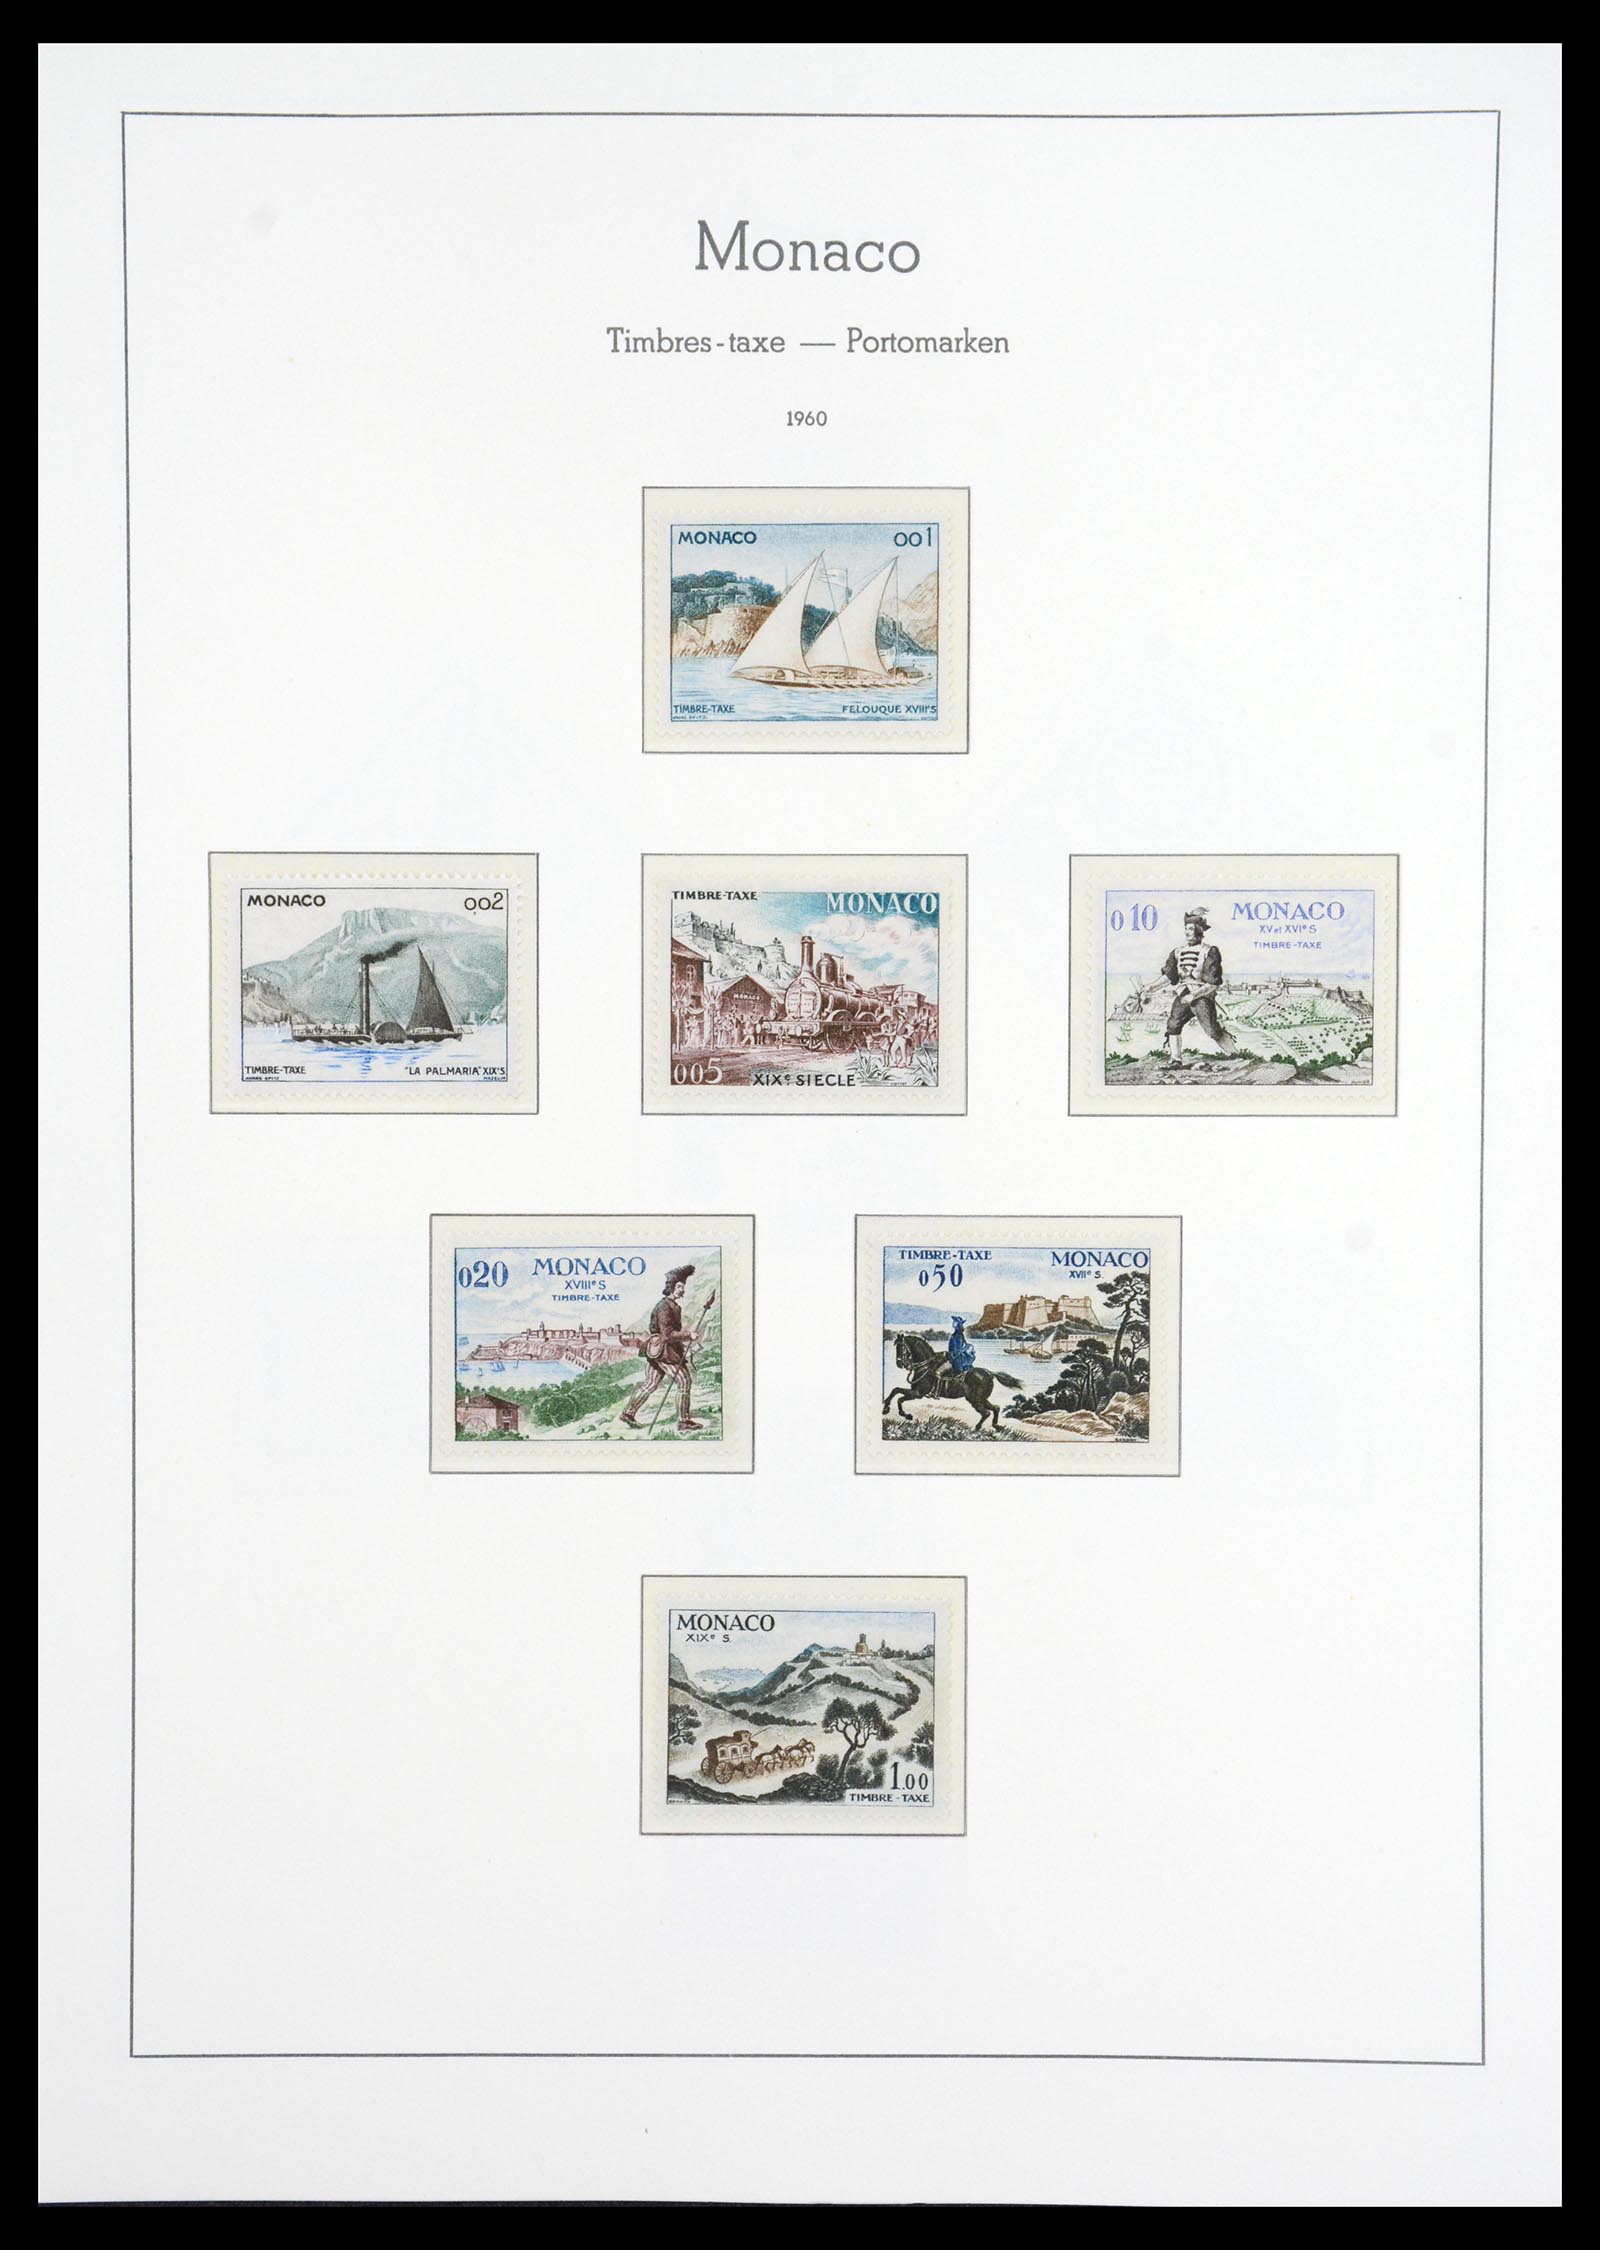 36735 074 - Stamp collection 36735 Monaco 1885-1966.